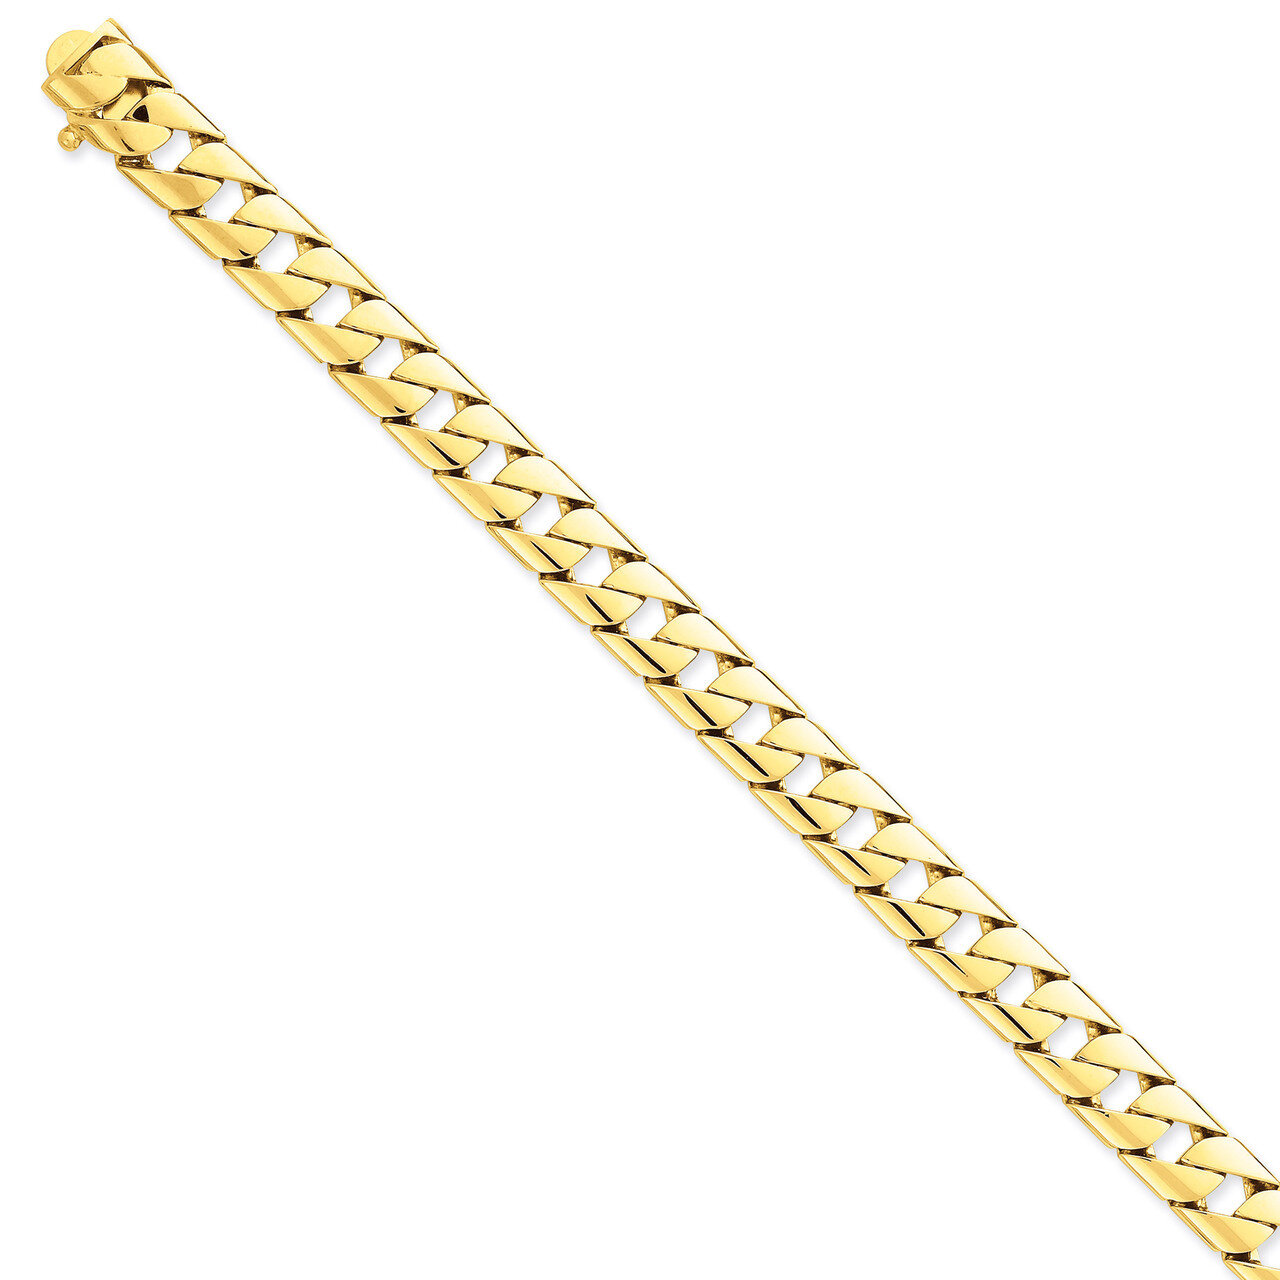 10mm Hand-polished Fancy Link Chain 8 Inch 14k Gold LK141-8